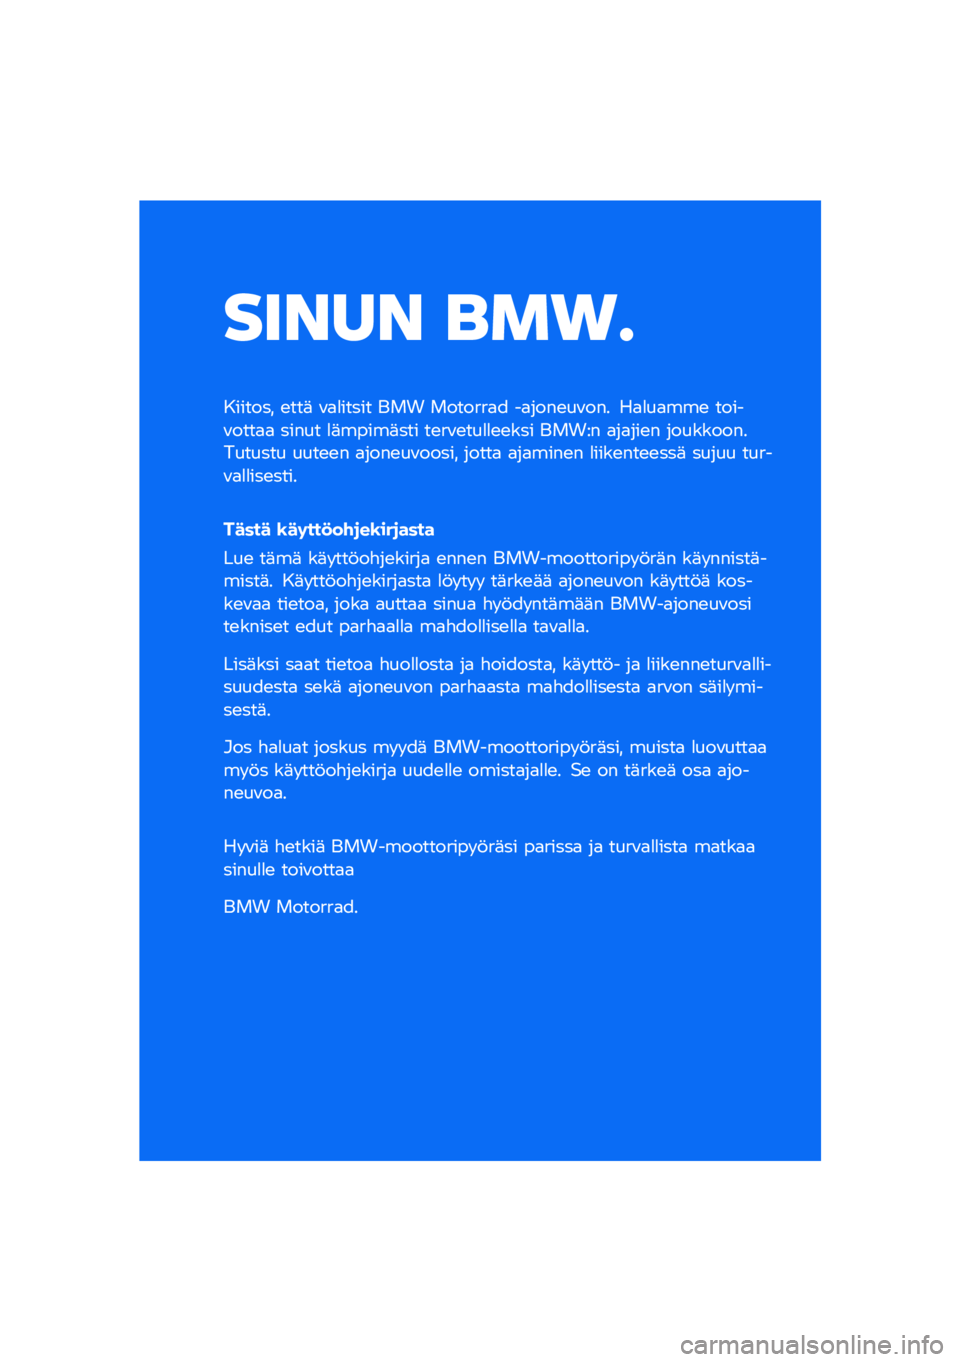 BMW MOTORRAD C 400 GT 2021  Käsikirja (in Finnish) ����� ���\b�	
������� �\b���	 �\f�
�
����� ��� �������
� ��
����\b��\f��� ��
�
��
���\b �����\f����
�
 ����� �
�	�����	��� ��\b��\f�\b�